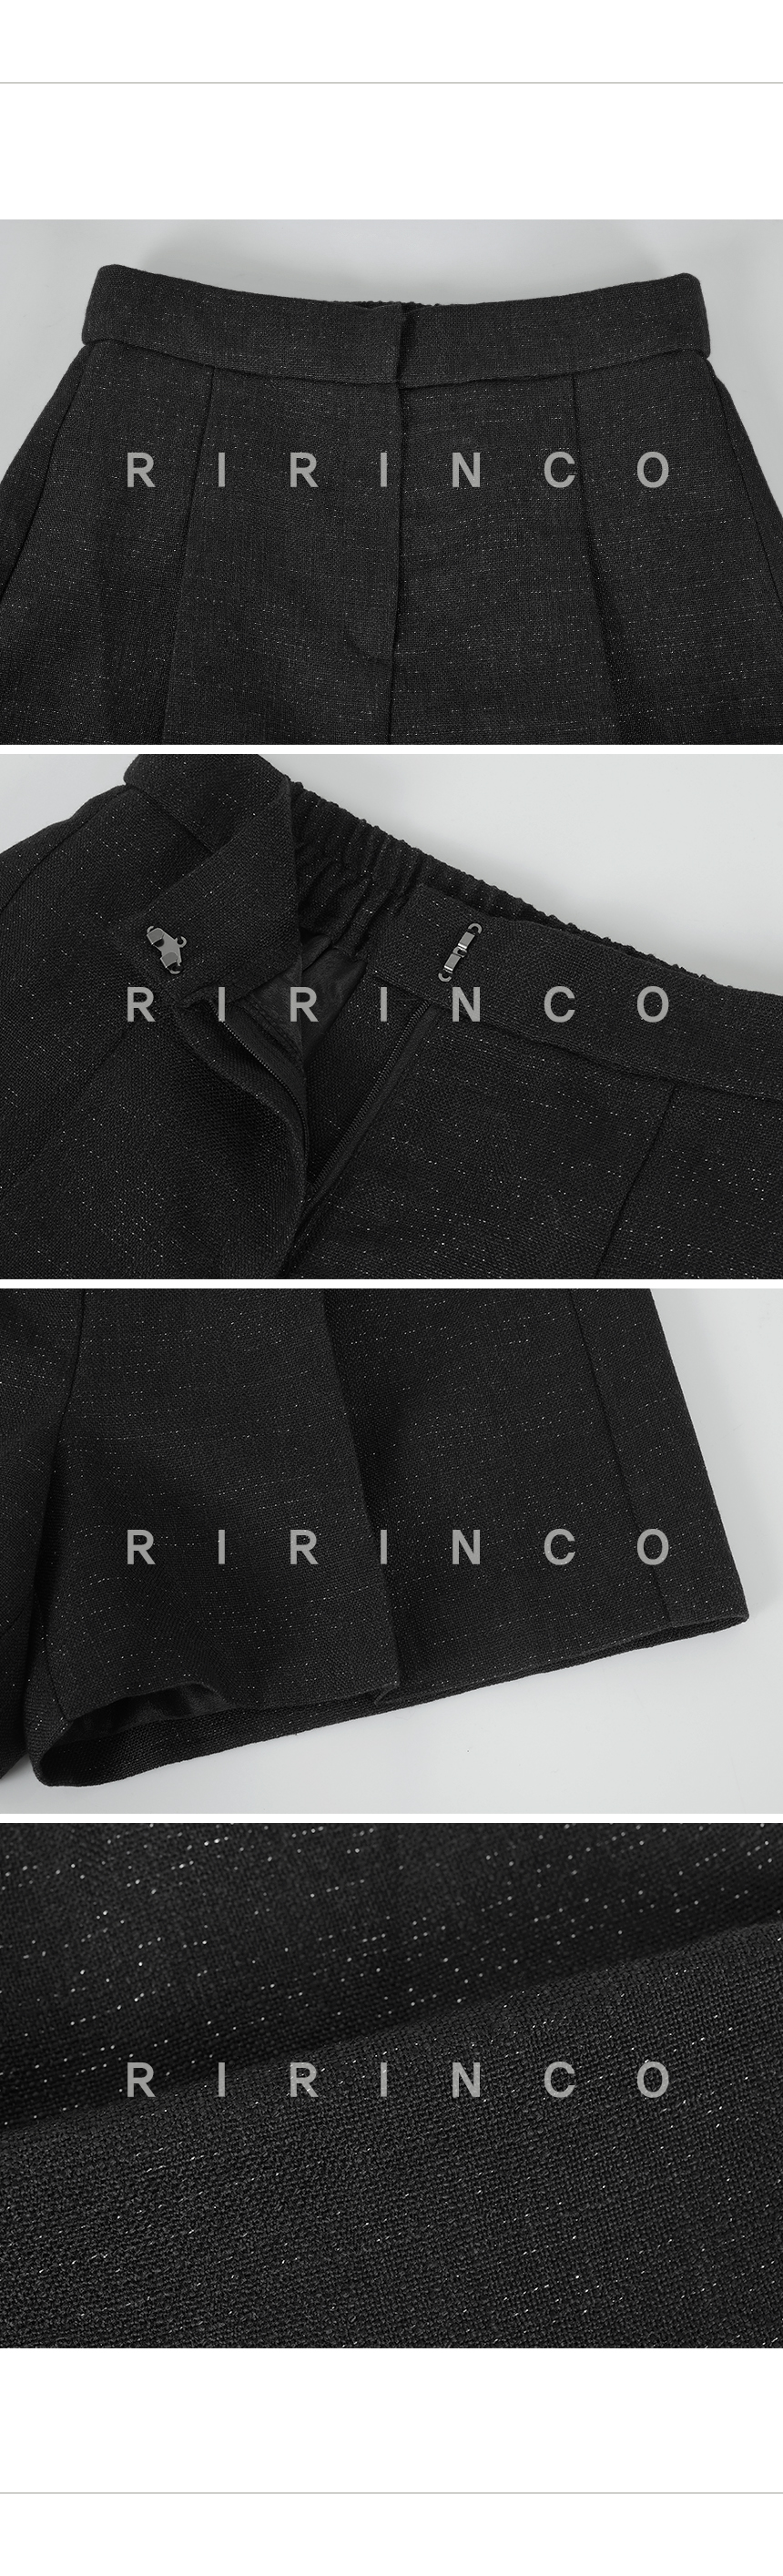 RIRINCO ツイードバックゴムピンタックショートパンツ 